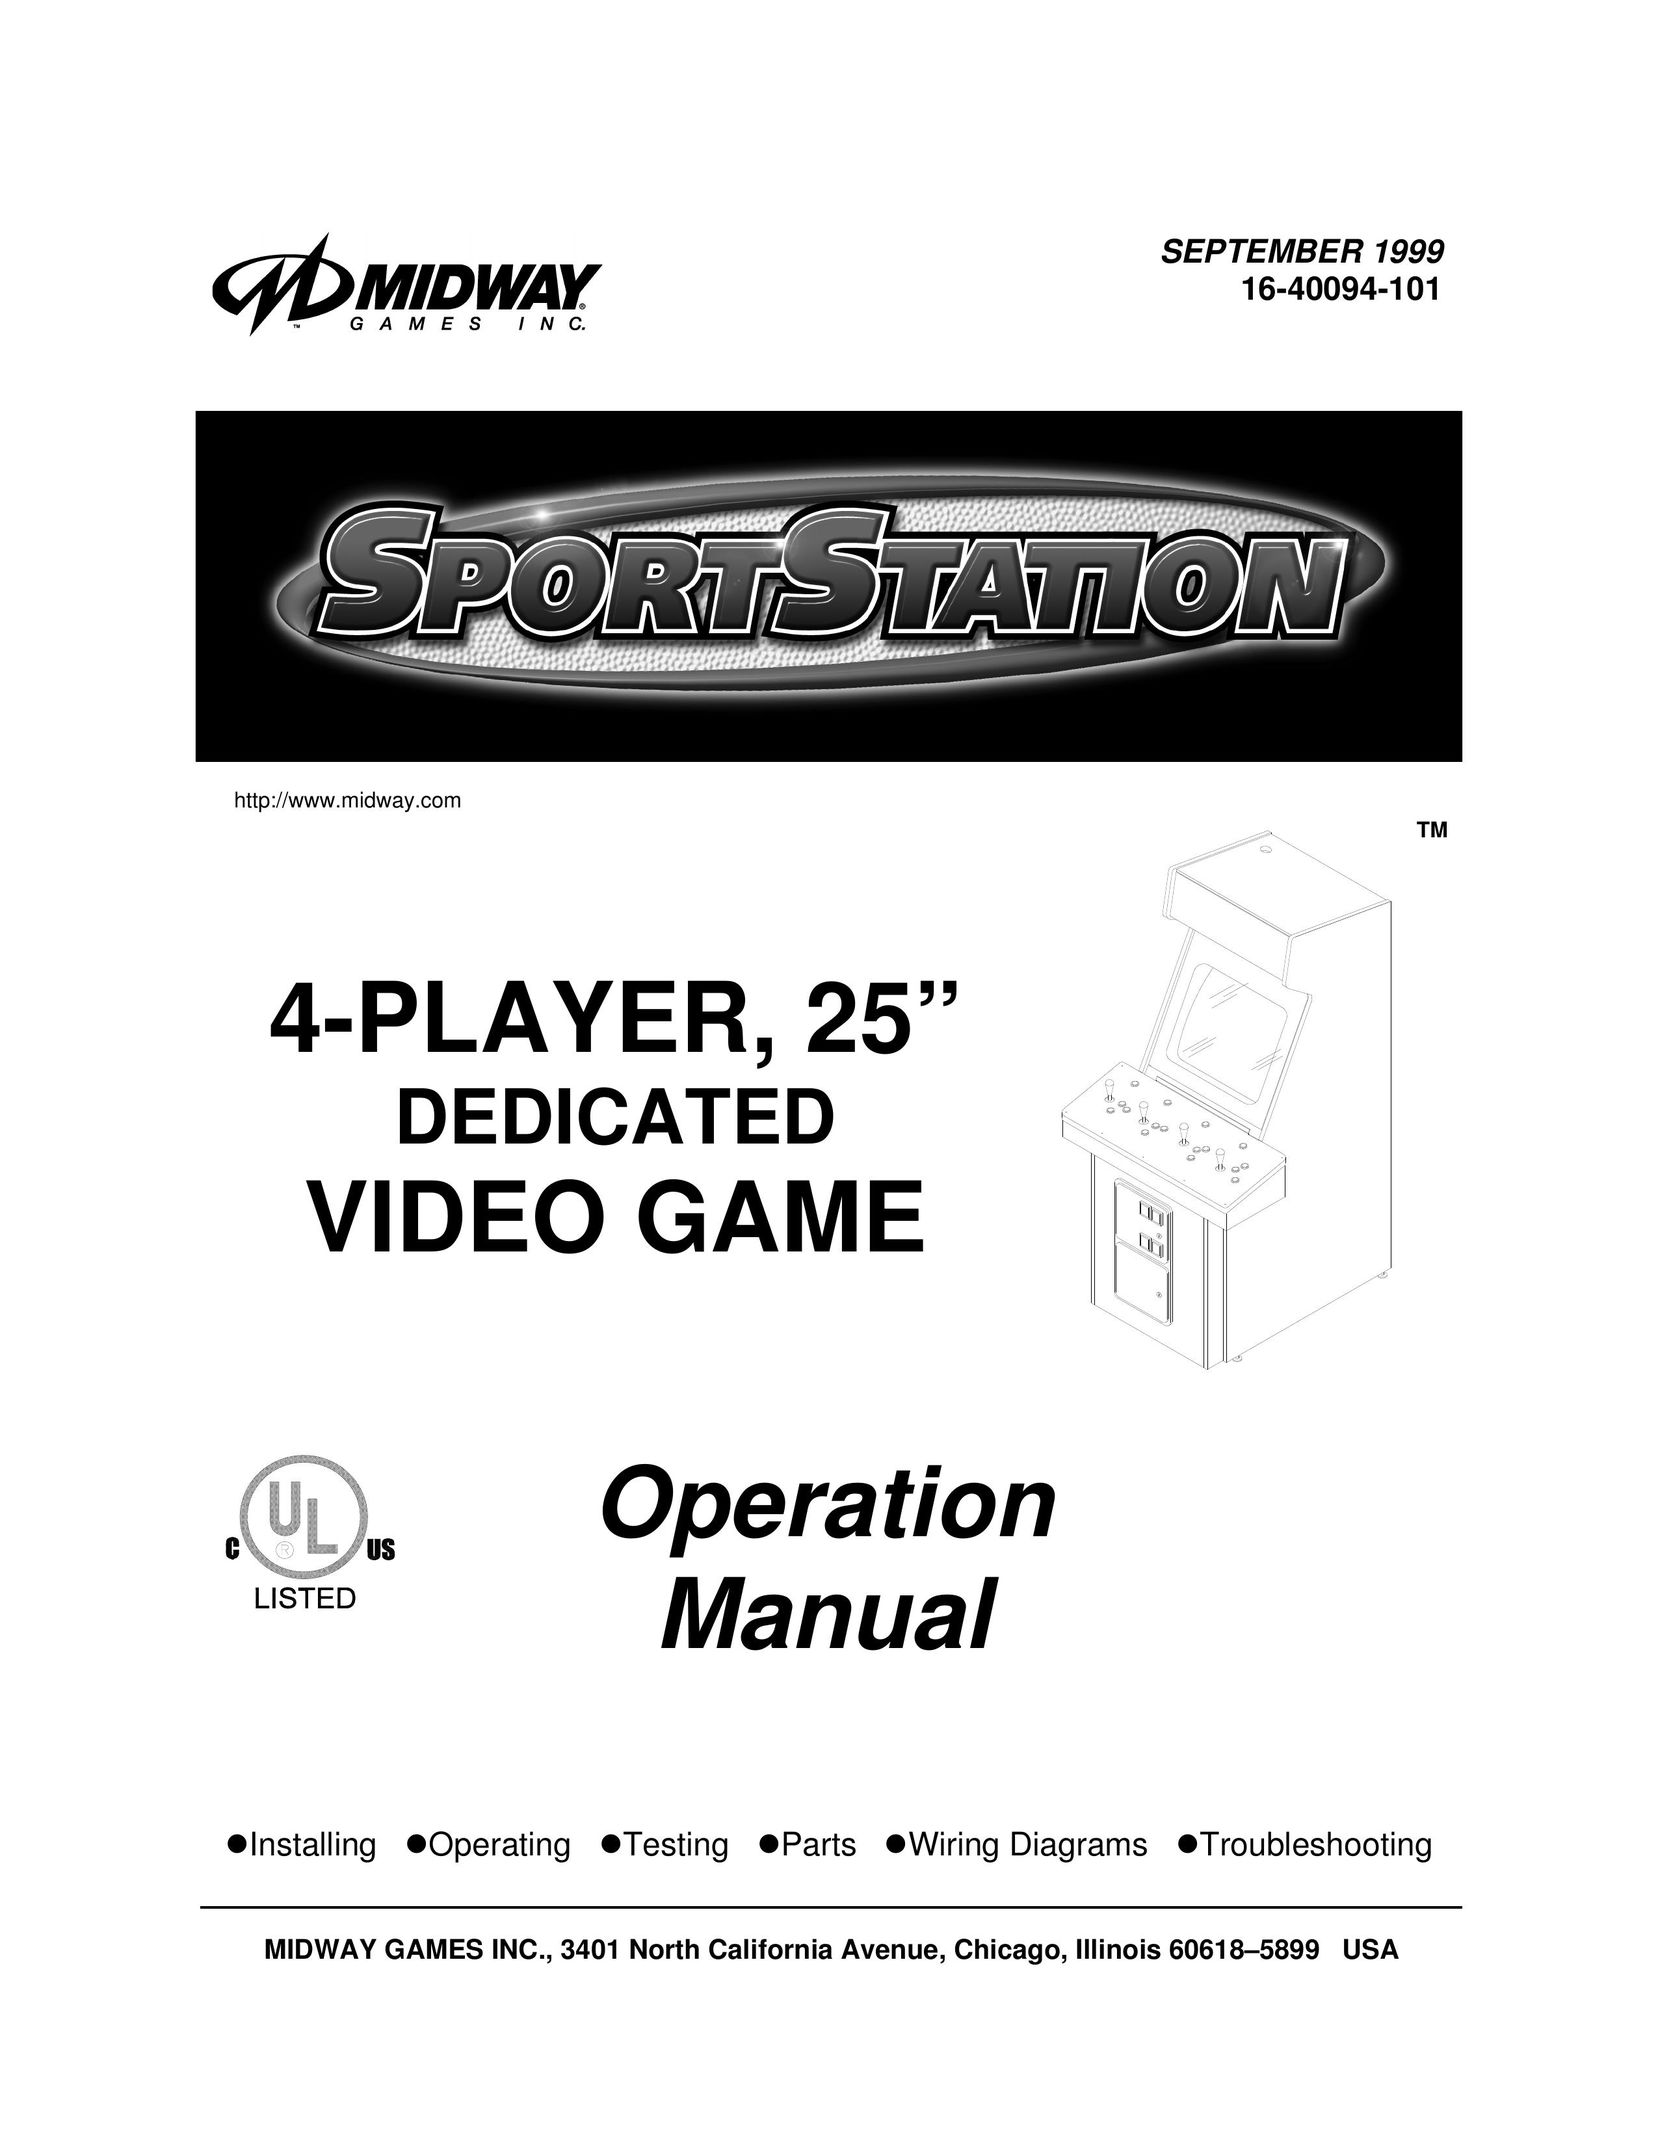 Midway 16-40094-101 Handheld Game System User Manual